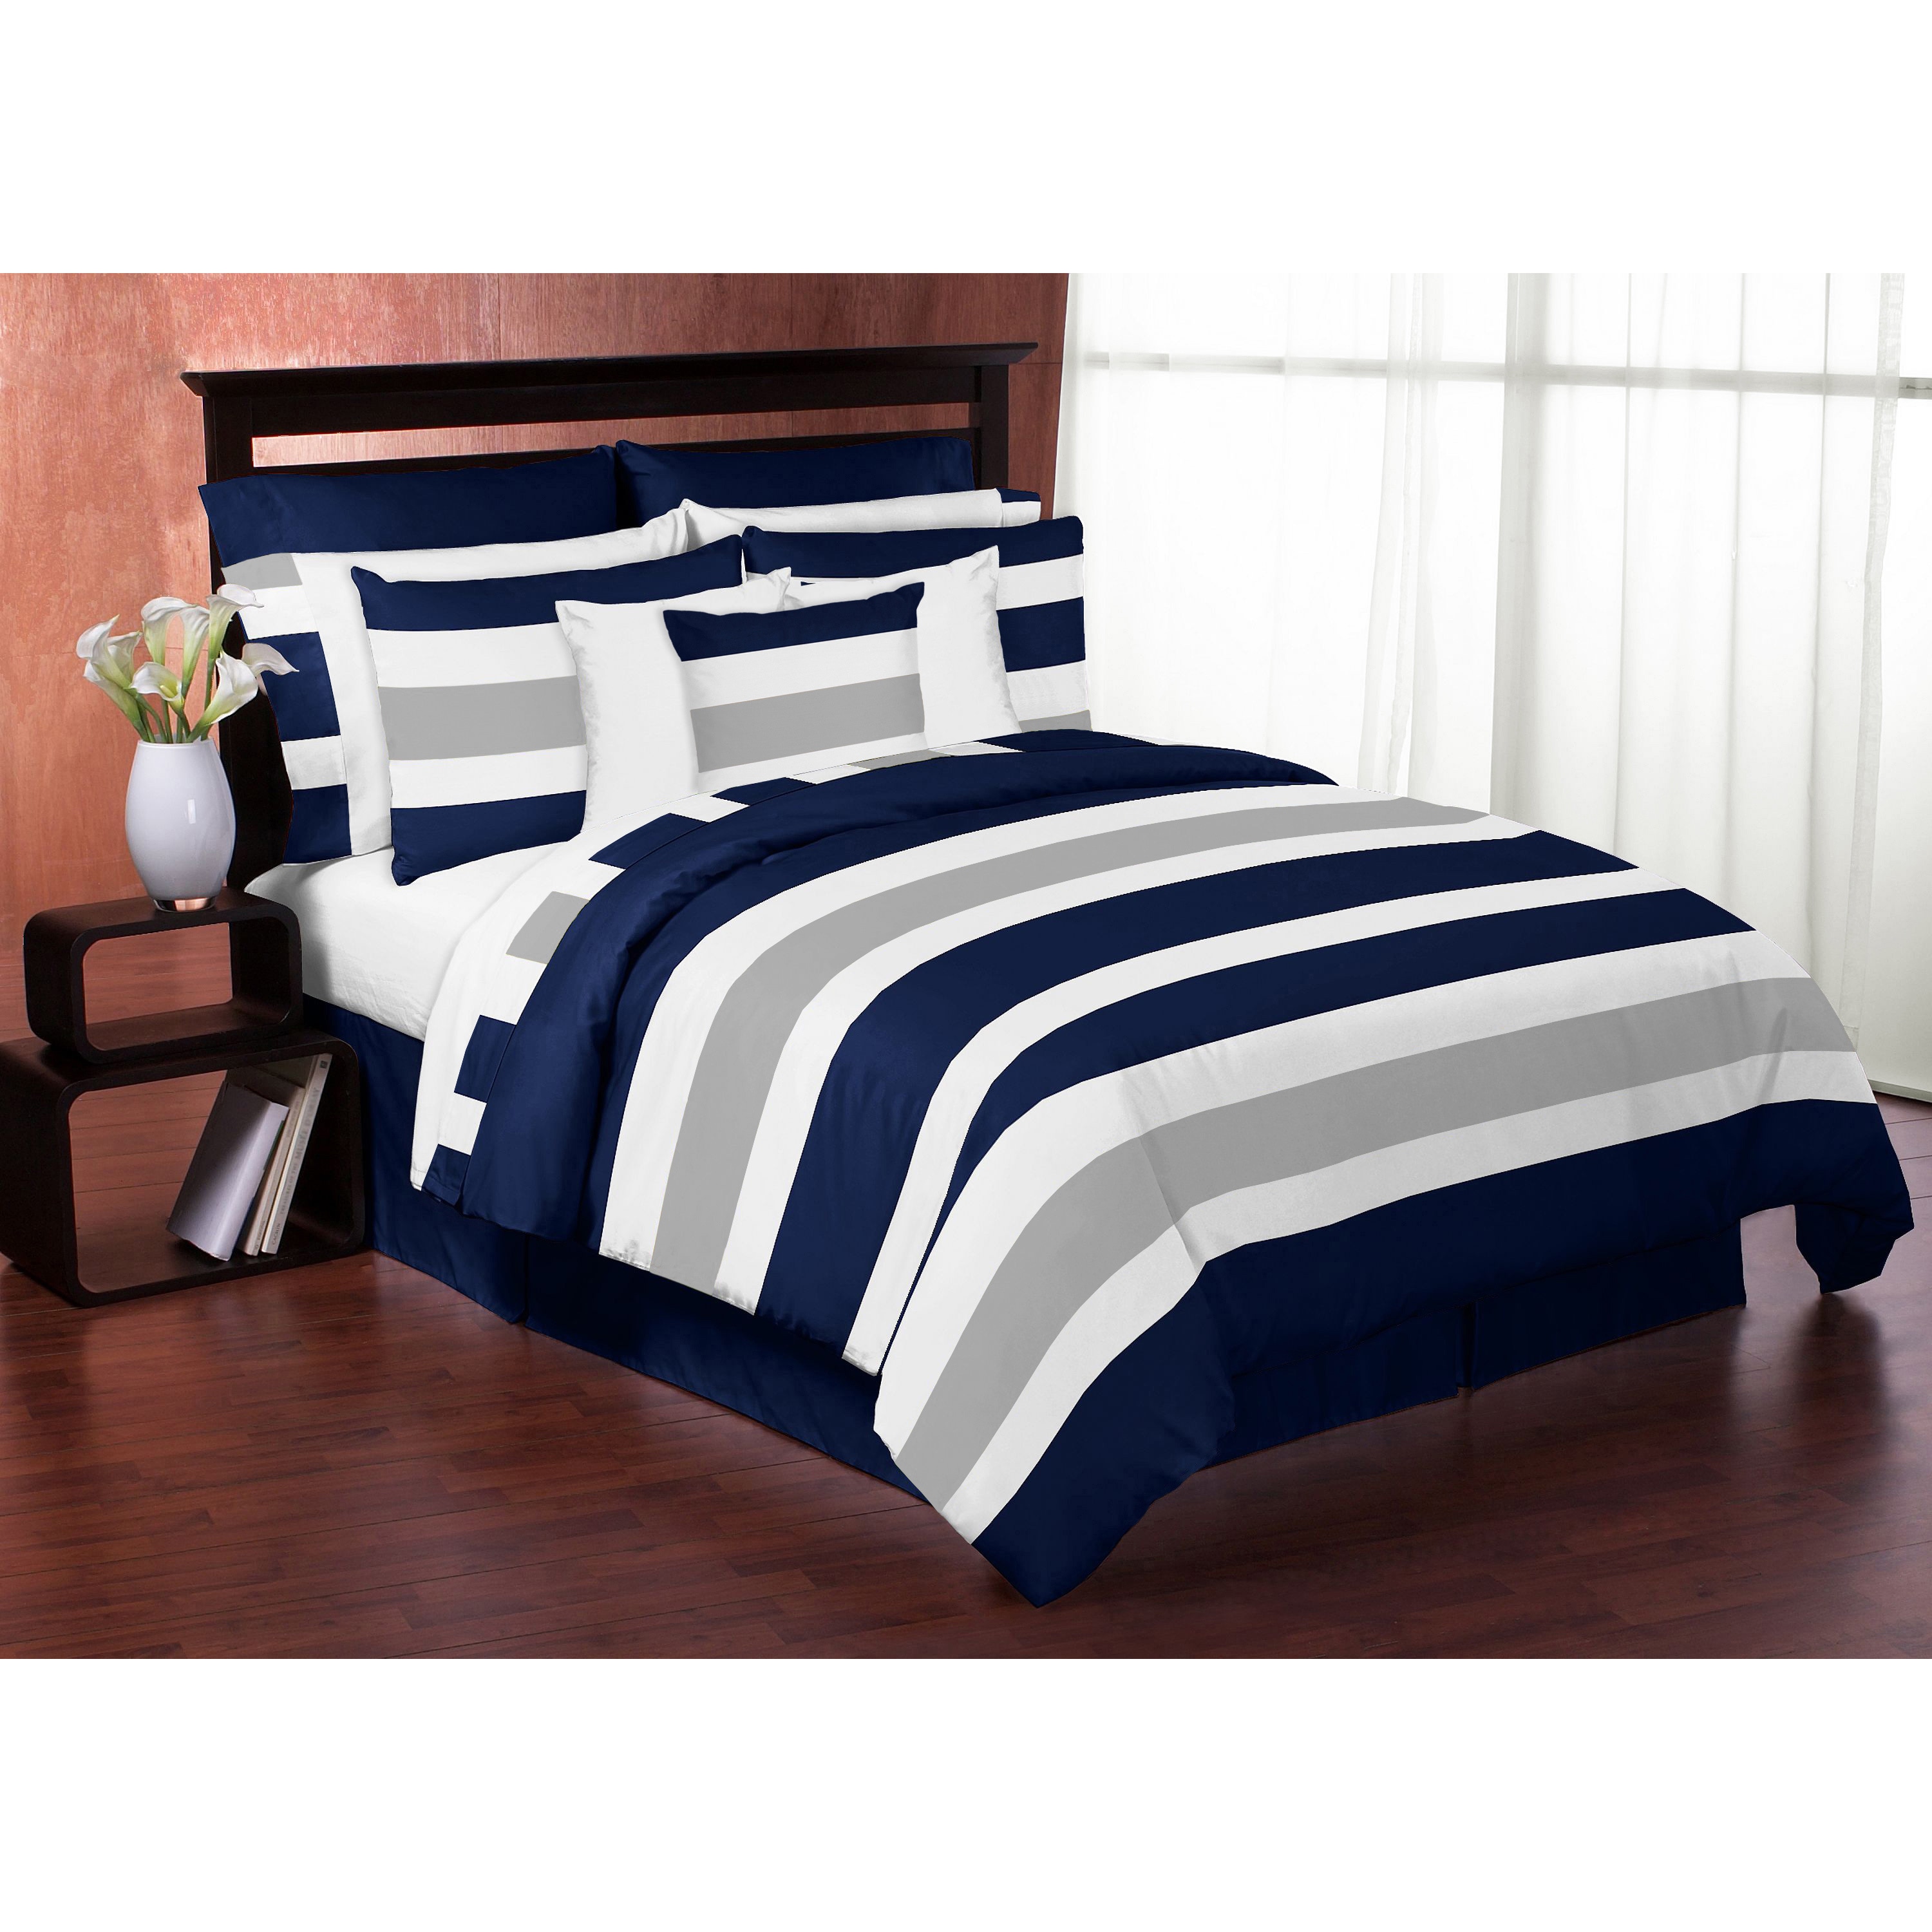 queen size bed comforter sets